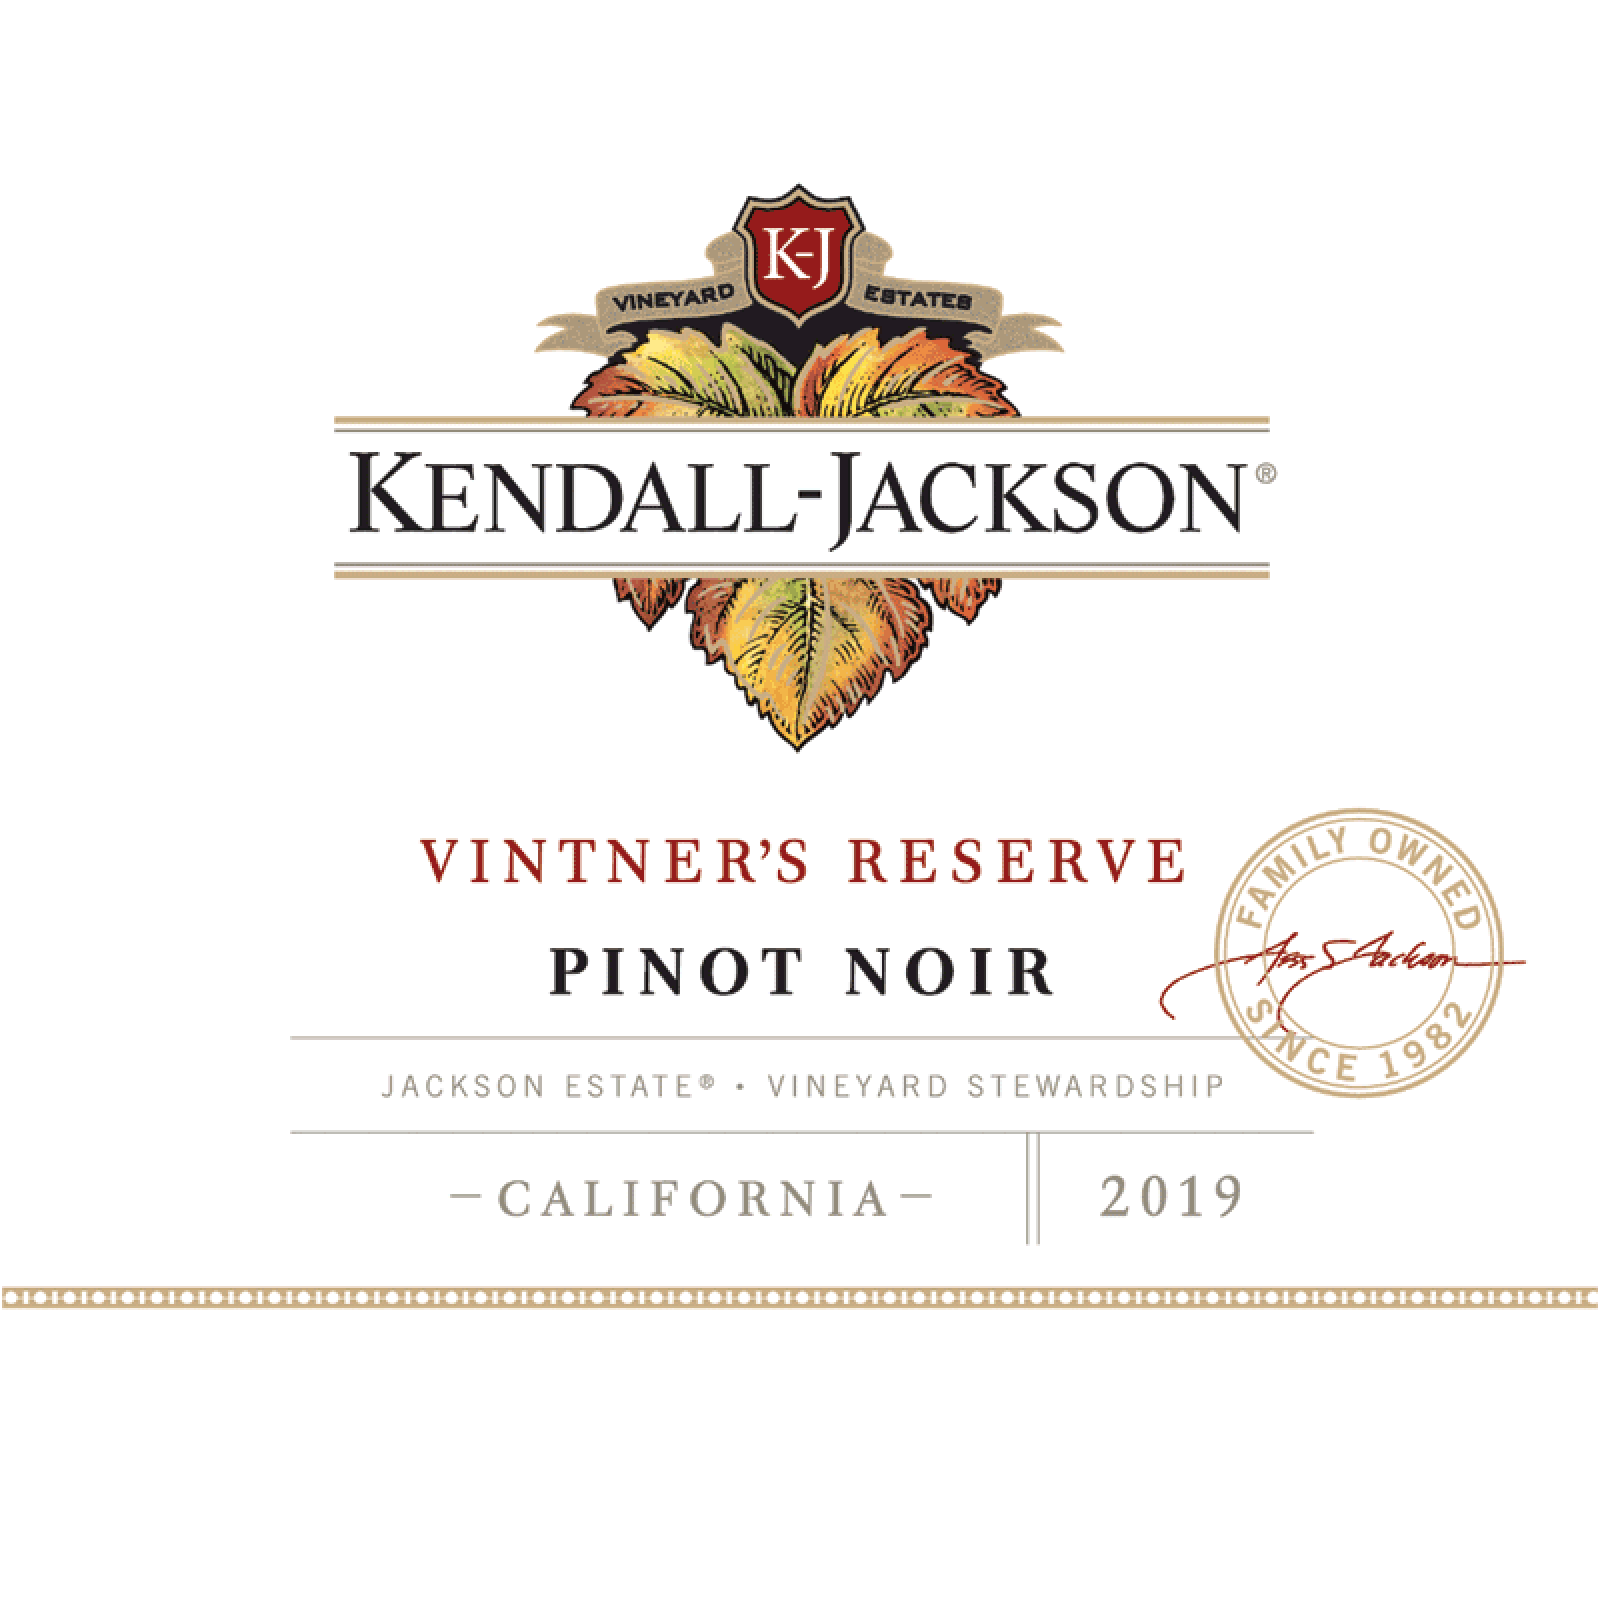 Kendall-Jackson Vintner's Reserve Pinot Noir 2019